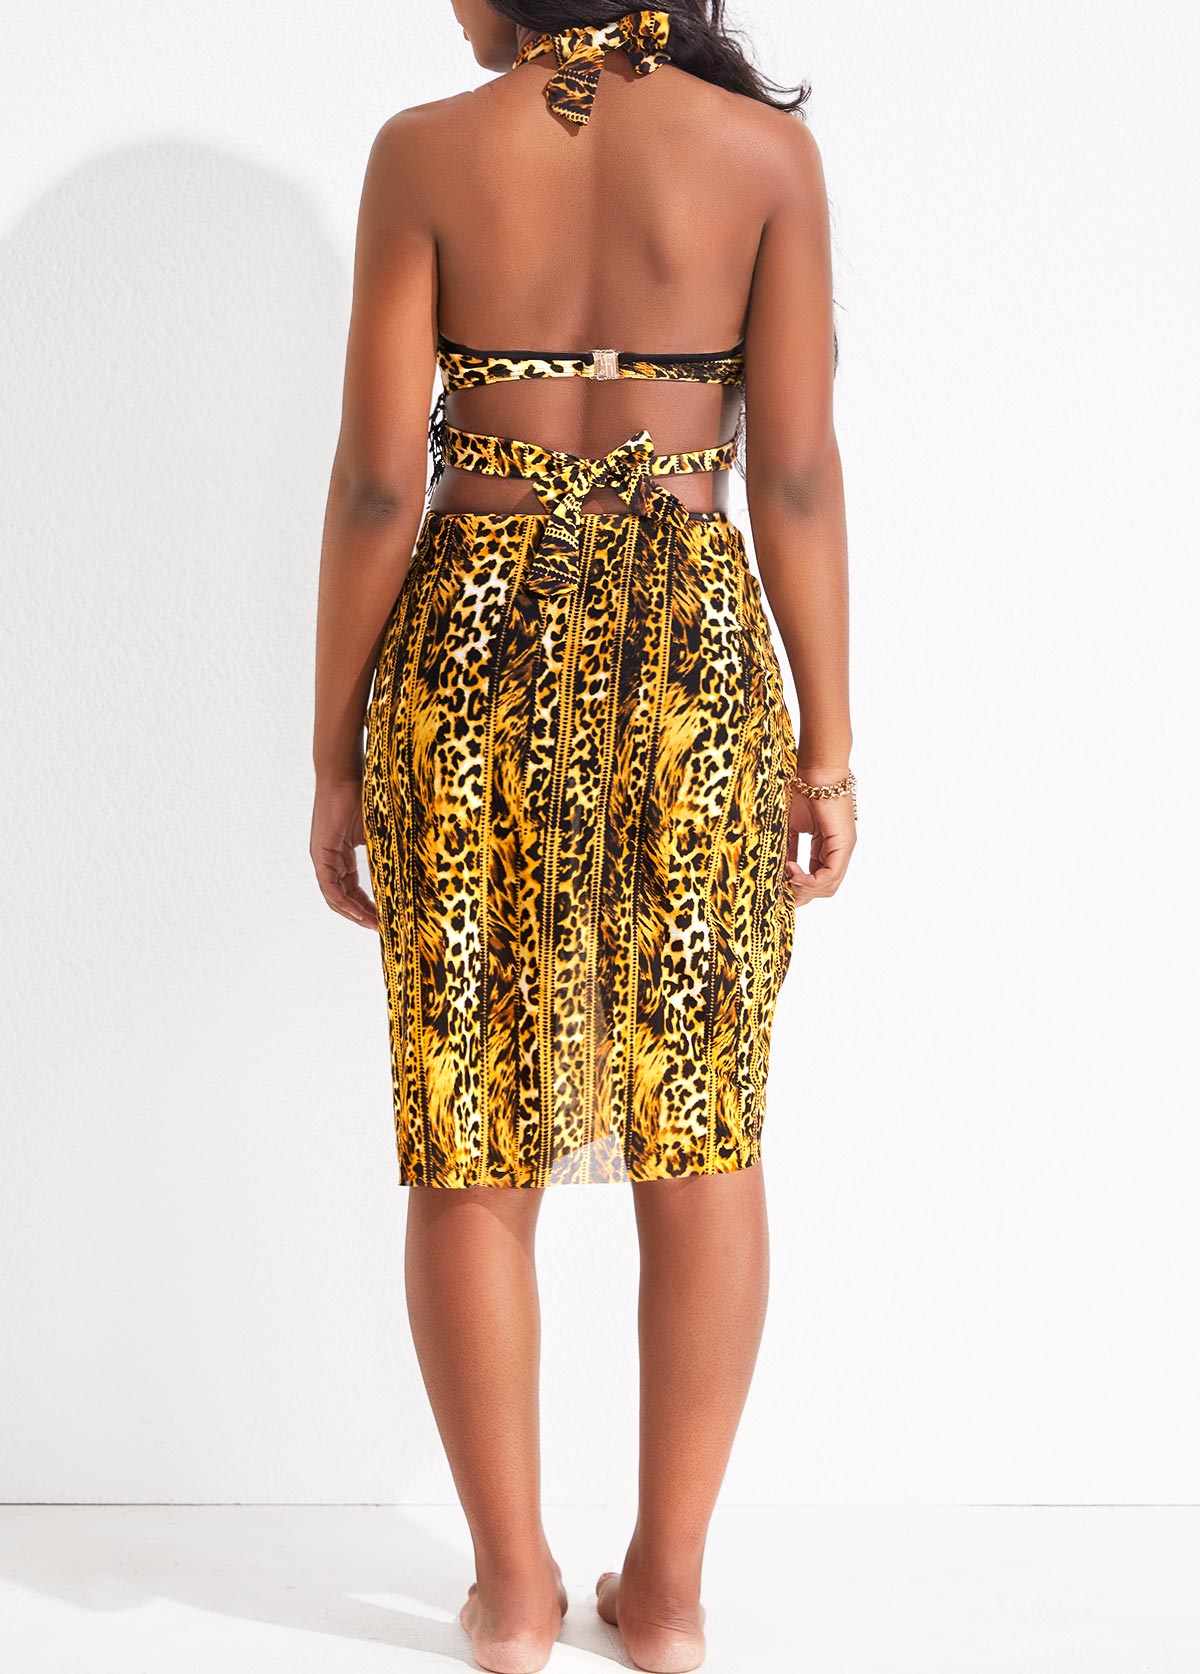 Leopard Criss Cross Gold Bikini Set and Cover Up